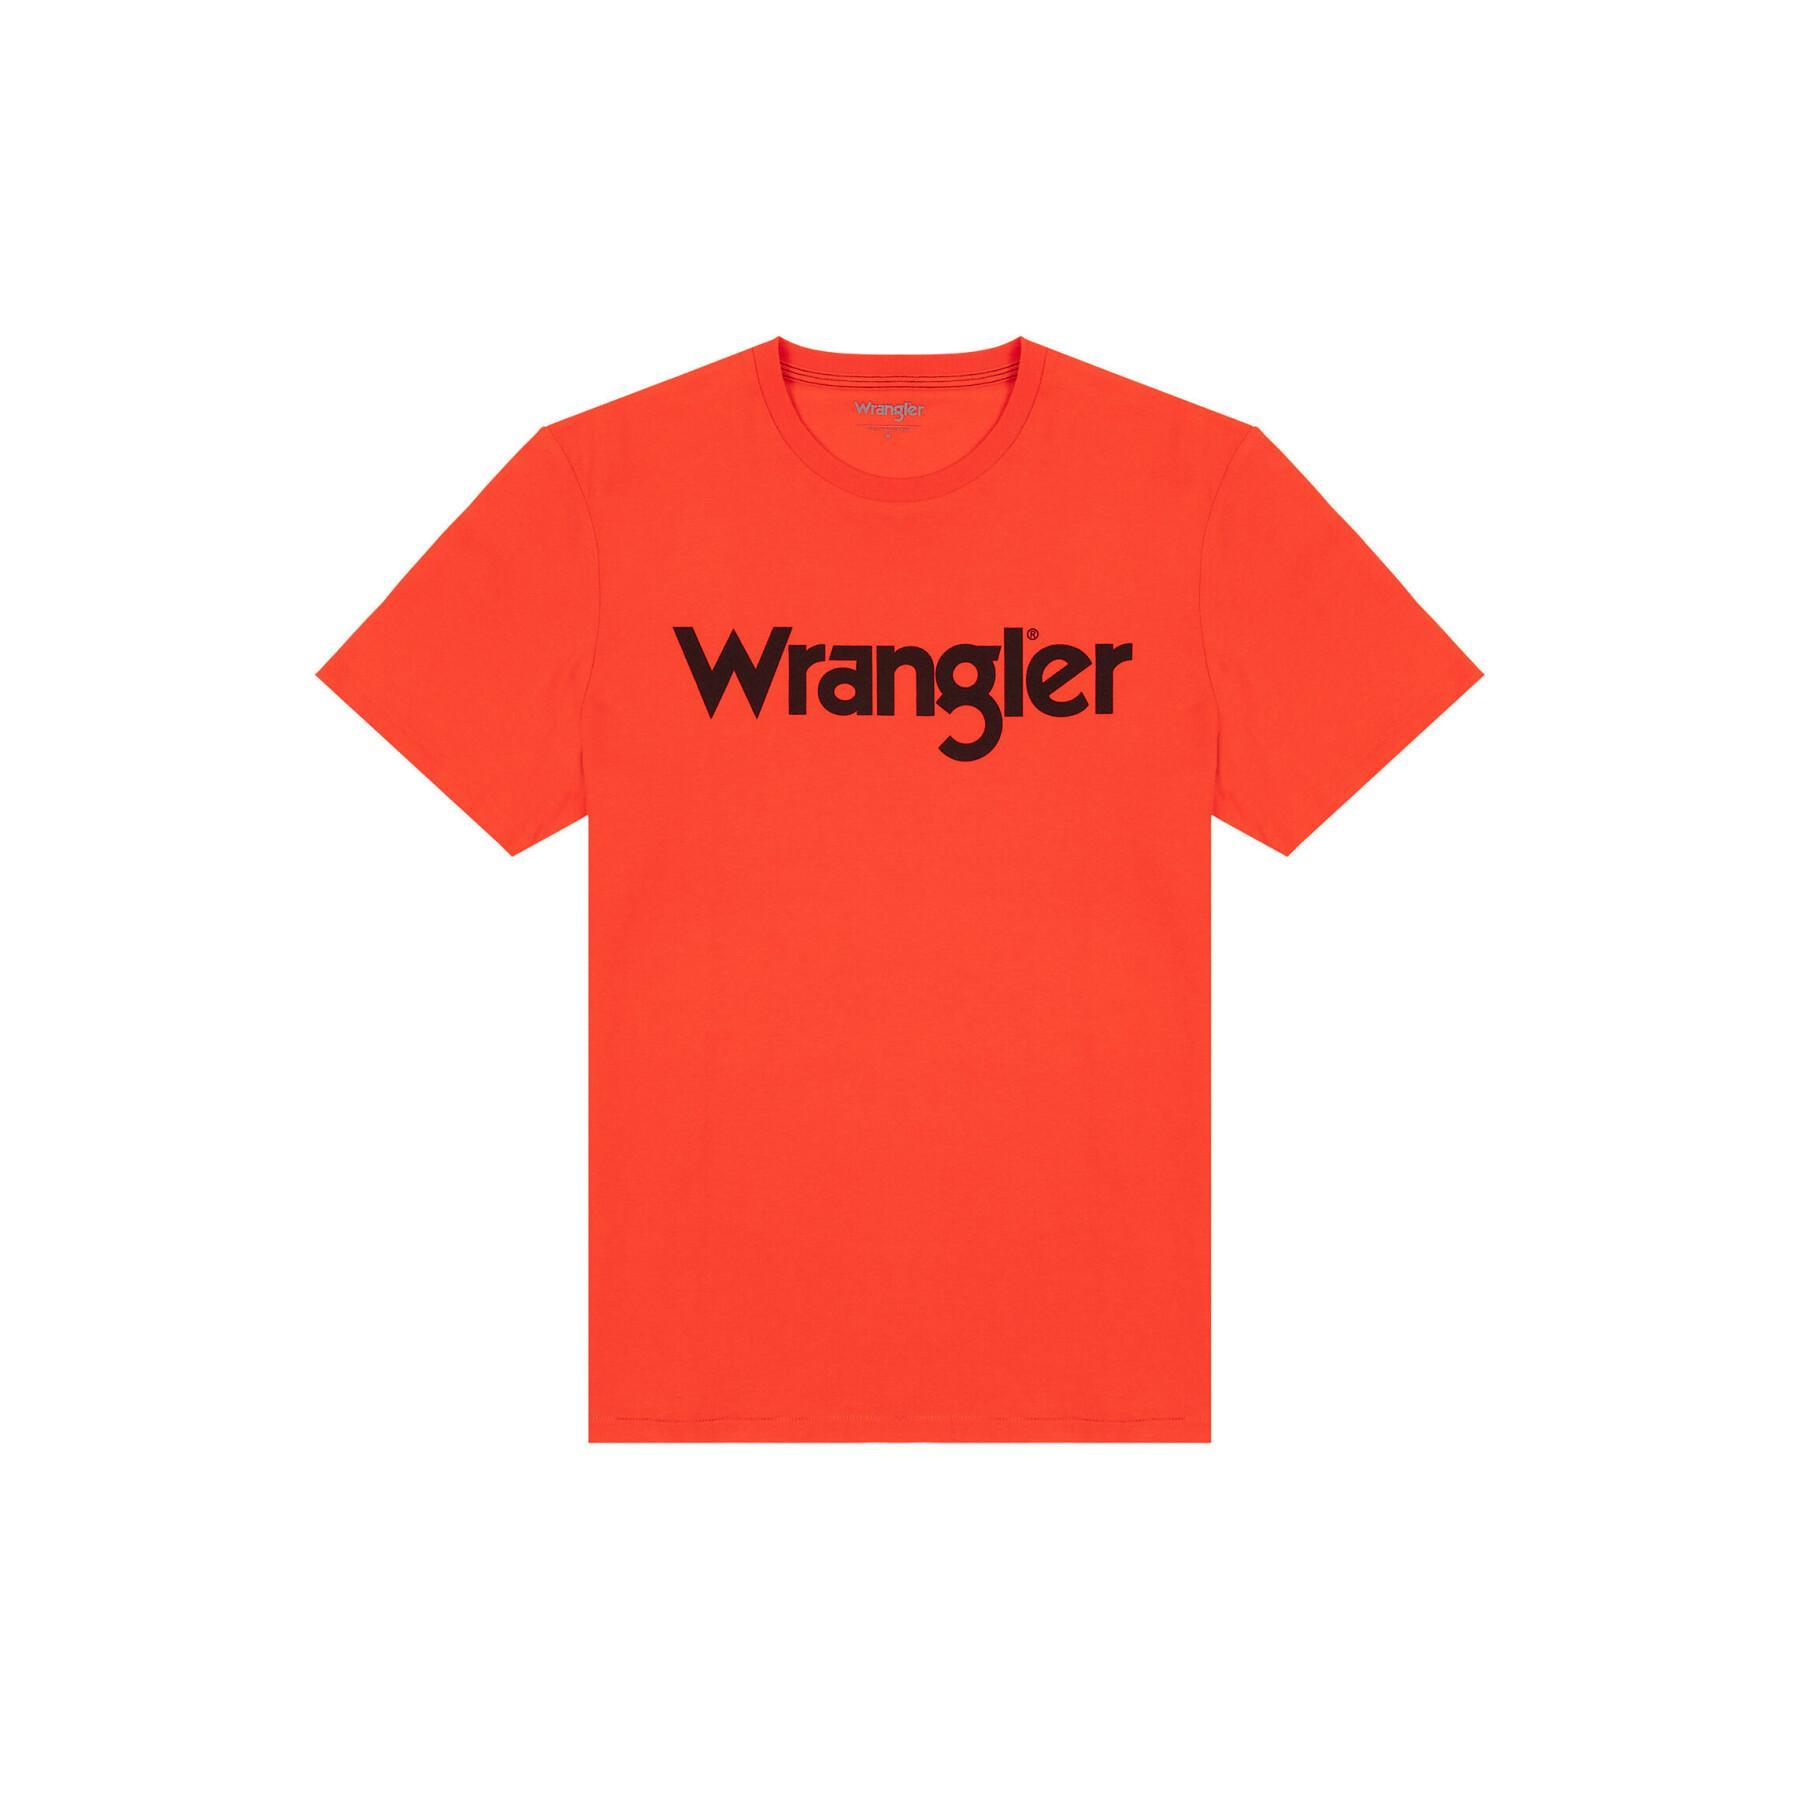 T-shirt Wrangler Logo - Wrangler - Lifestyle T-shirts - T-shirts